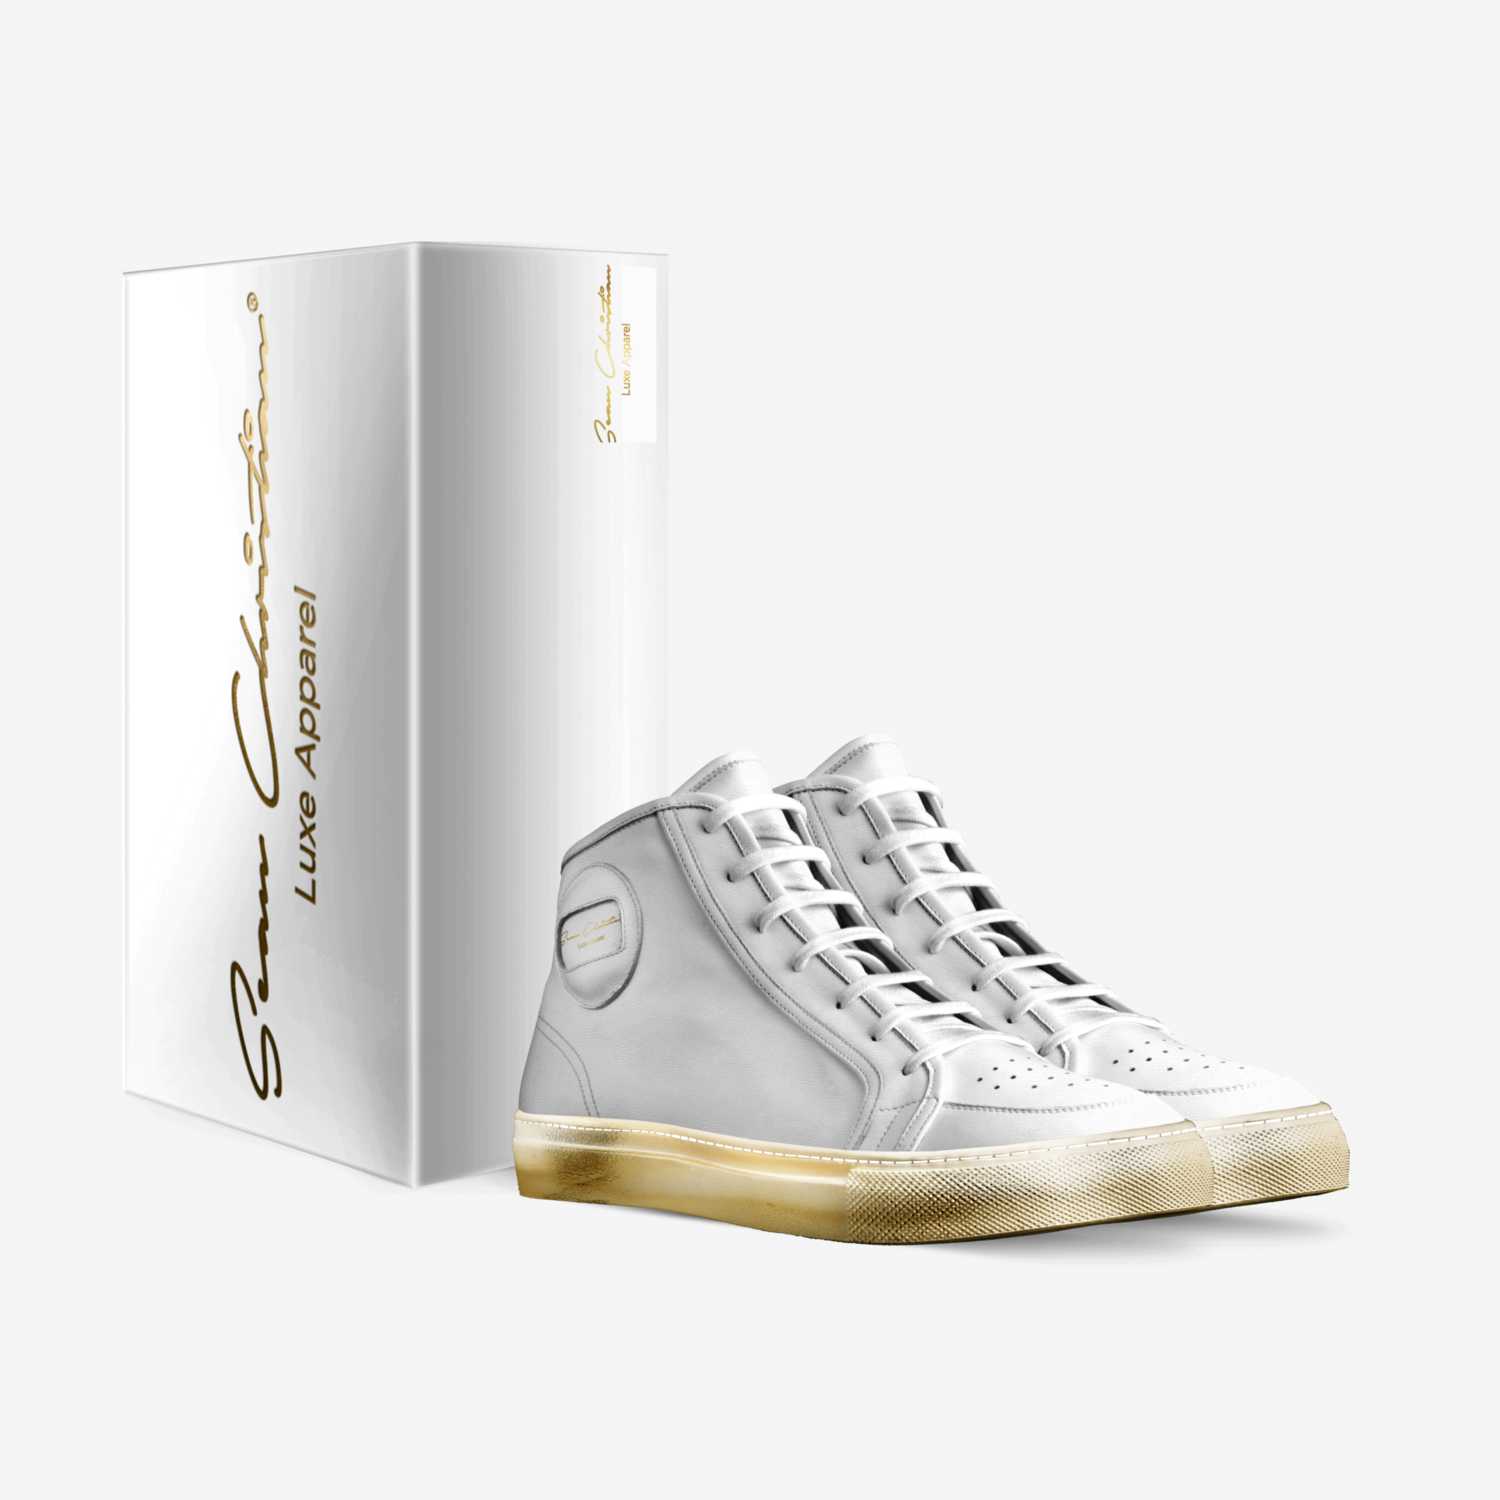 Sean Christian custom made in Italy shoes by David Wynn | Box view